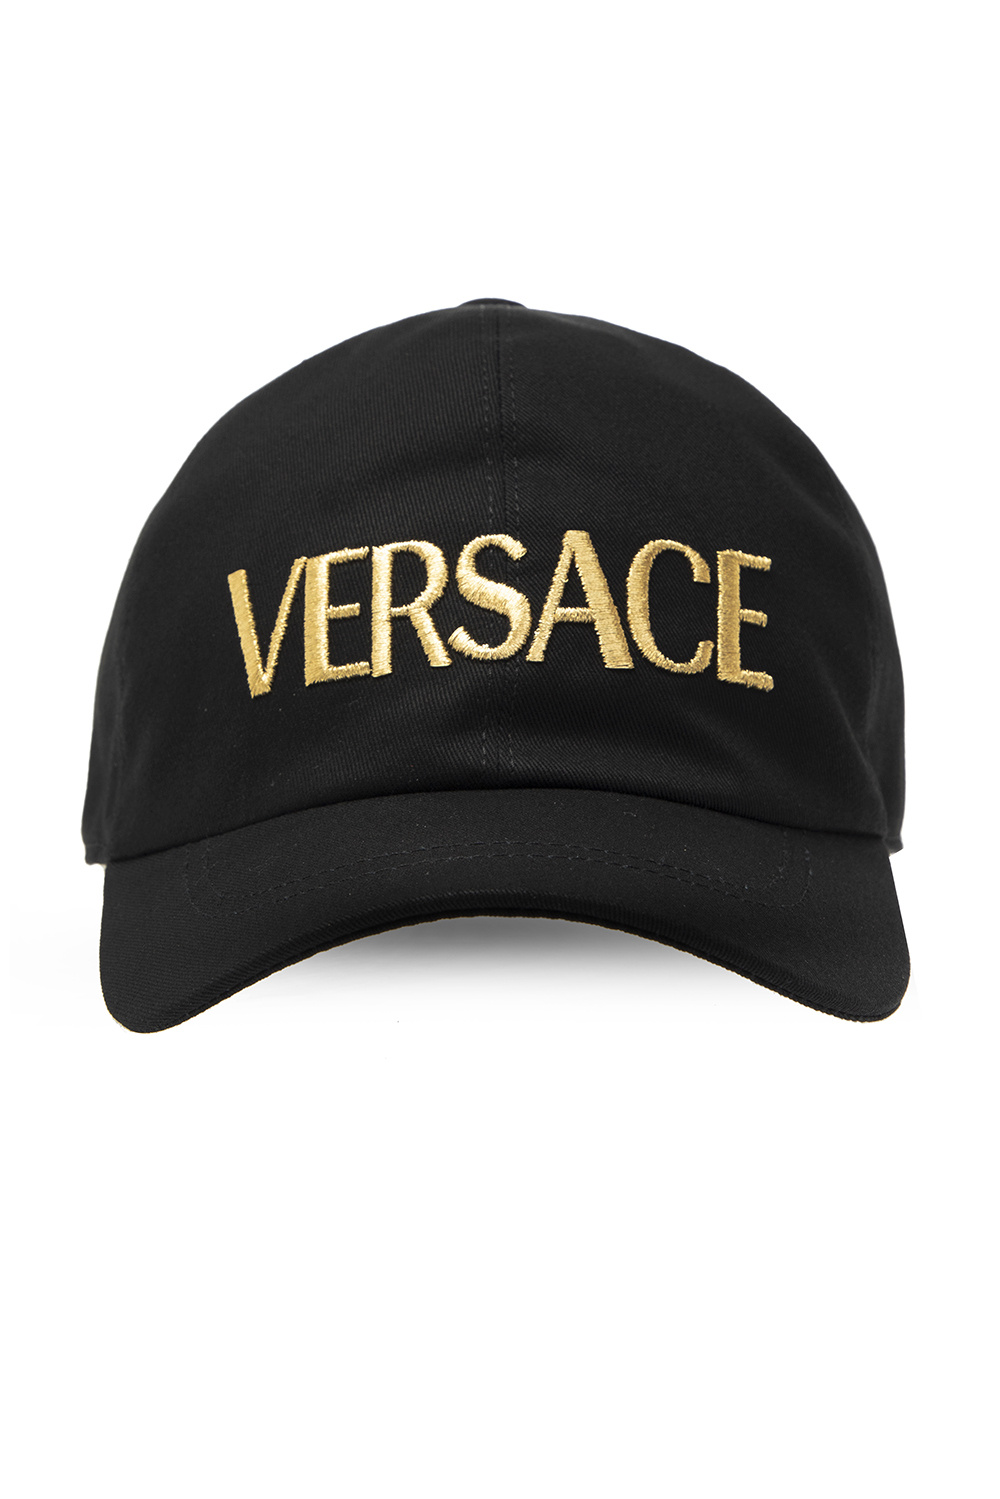 Versace Levis New Era Chicago Bulls Snapback Hats